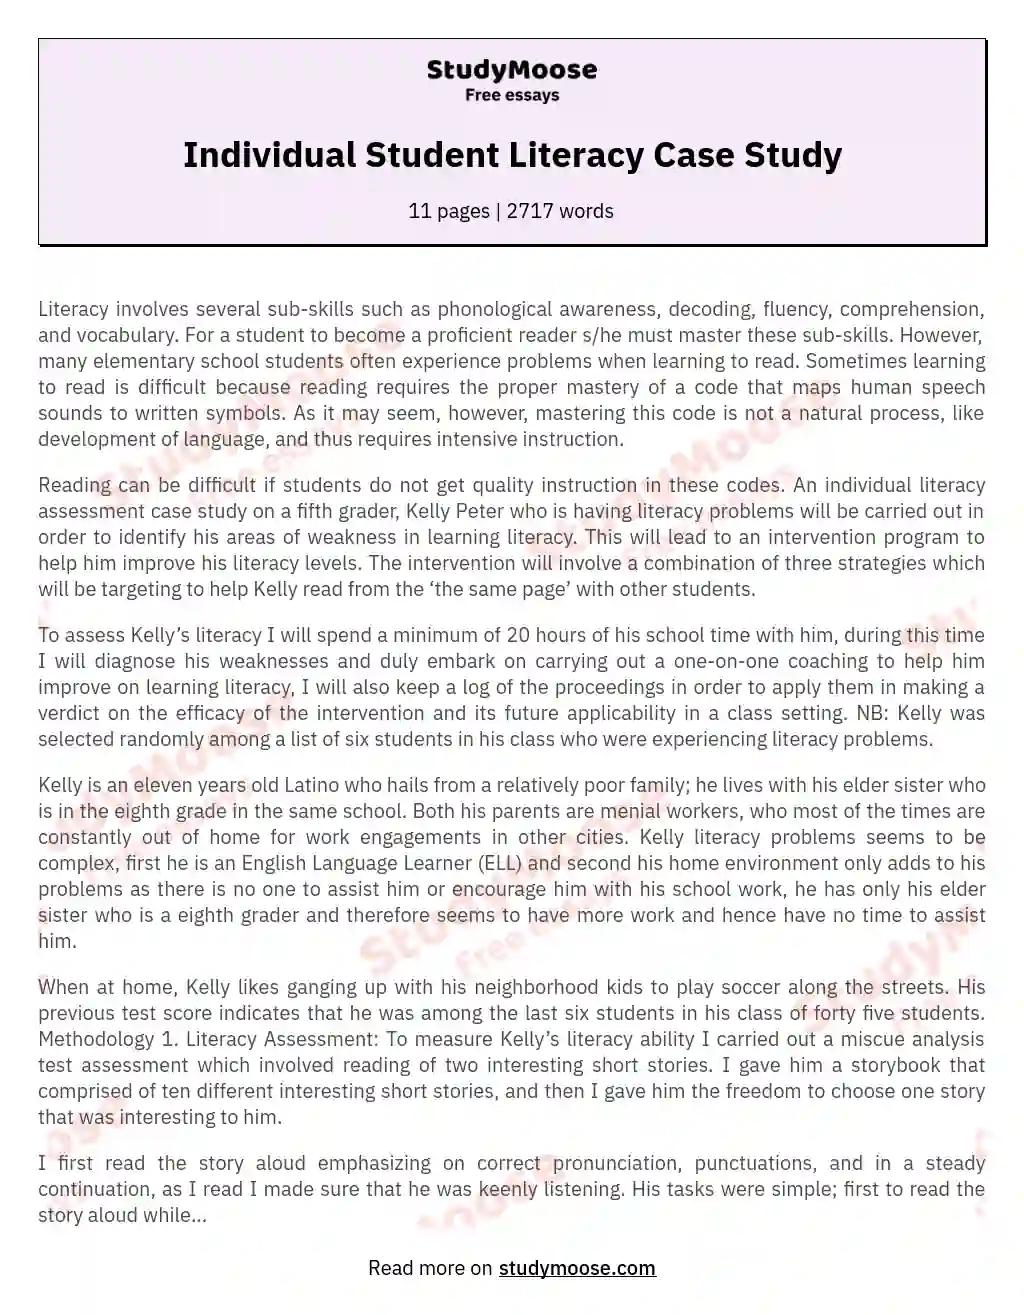 Individual Student Literacy Case Study essay